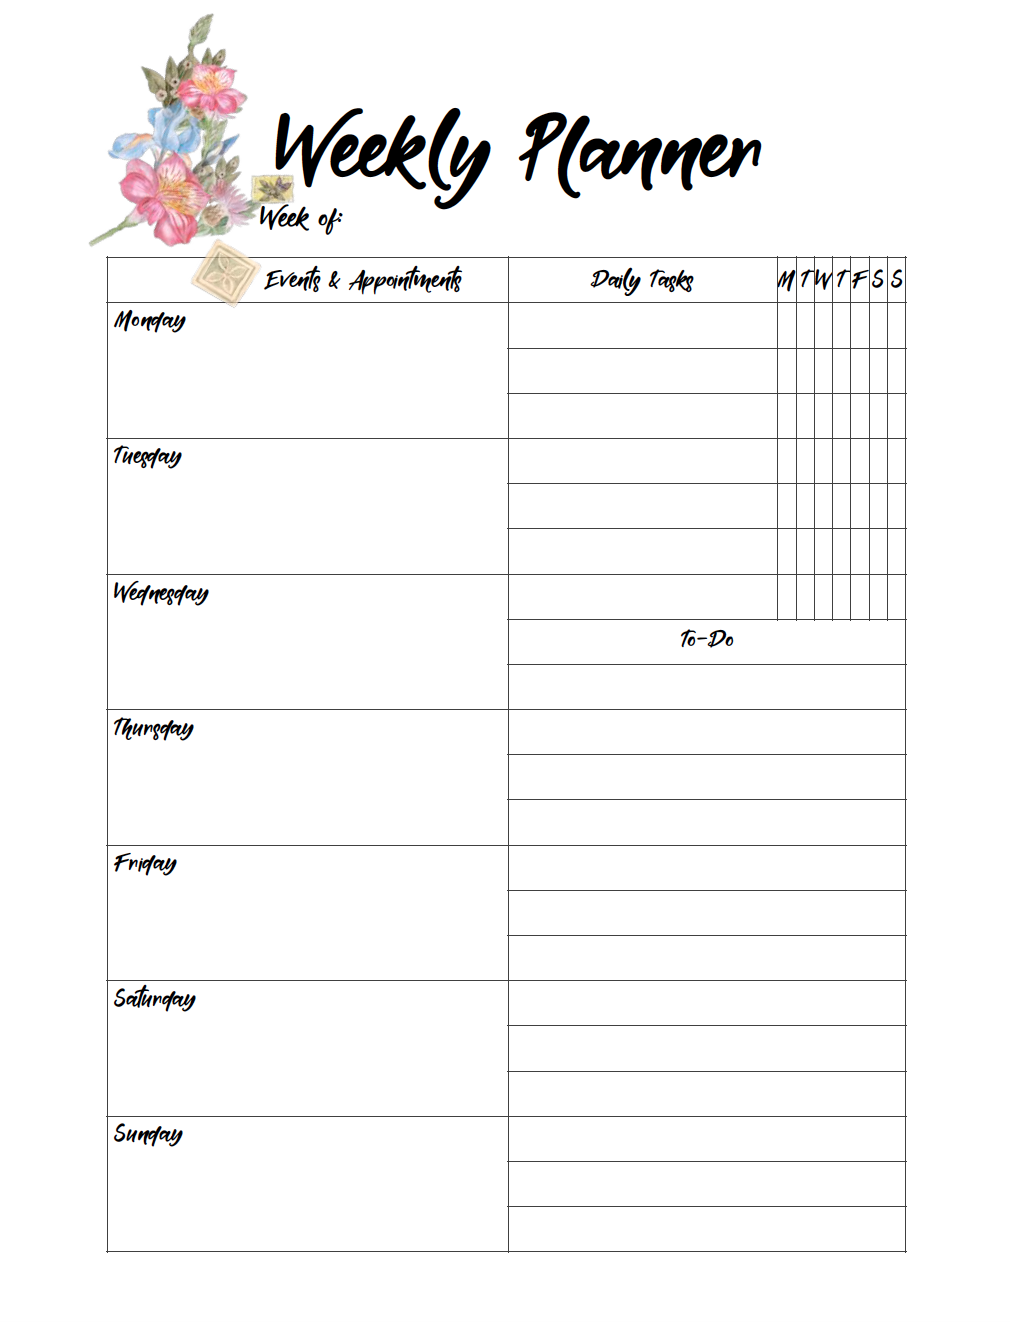 download-printable-weekly-planner-undated-floral-style-pdf